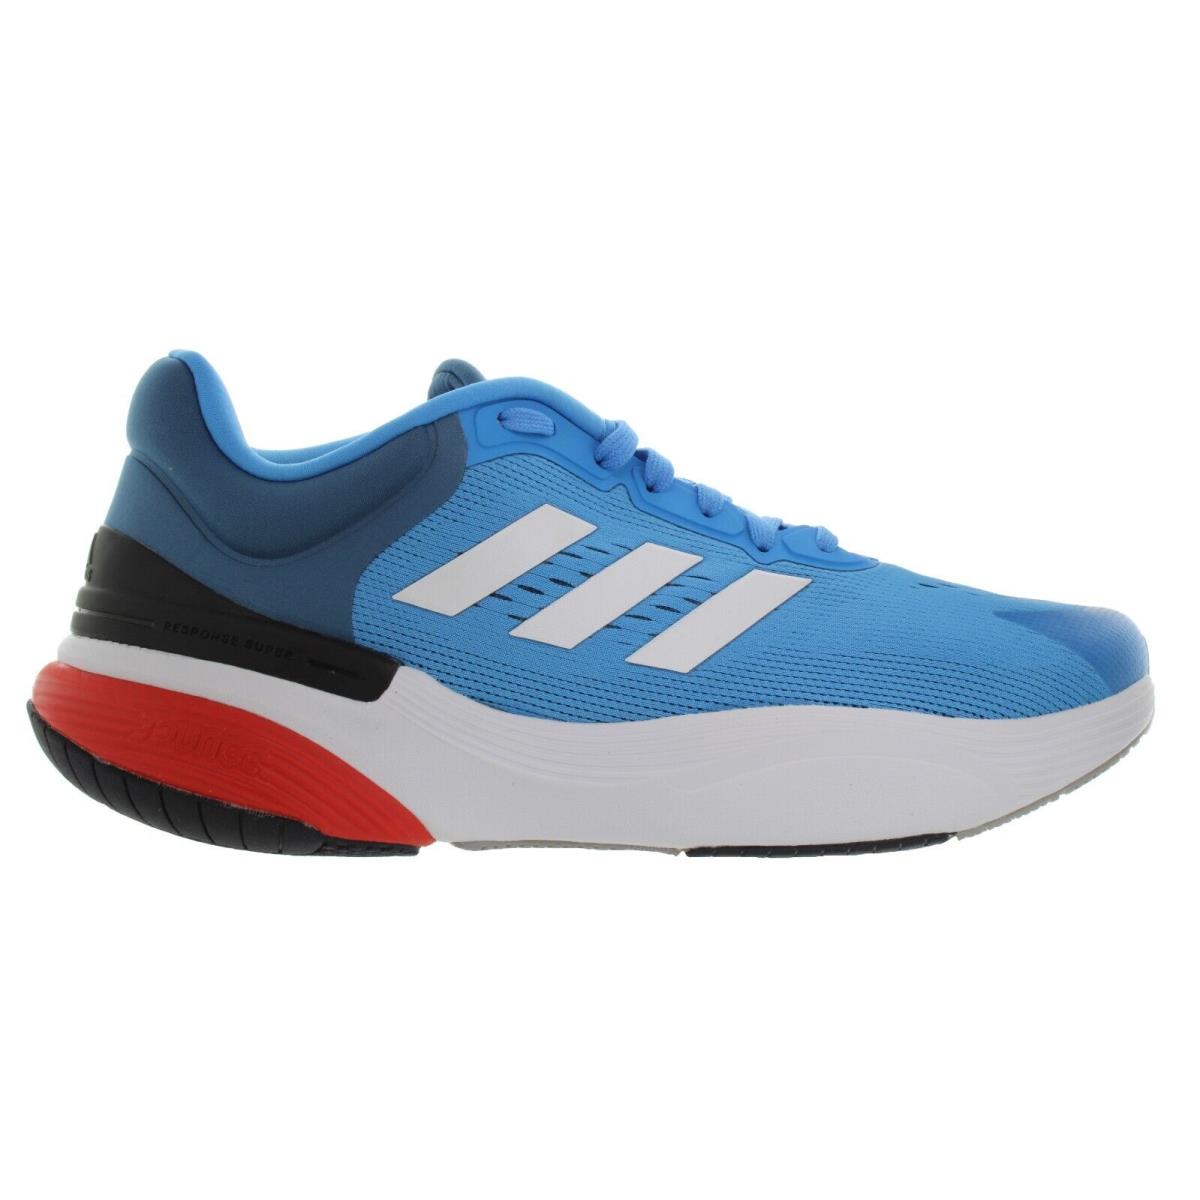 Adidas Men`s Response Super 3.0 Blue Training Shoes Size 11.5 - 12 - Blue, Cloud White, Red